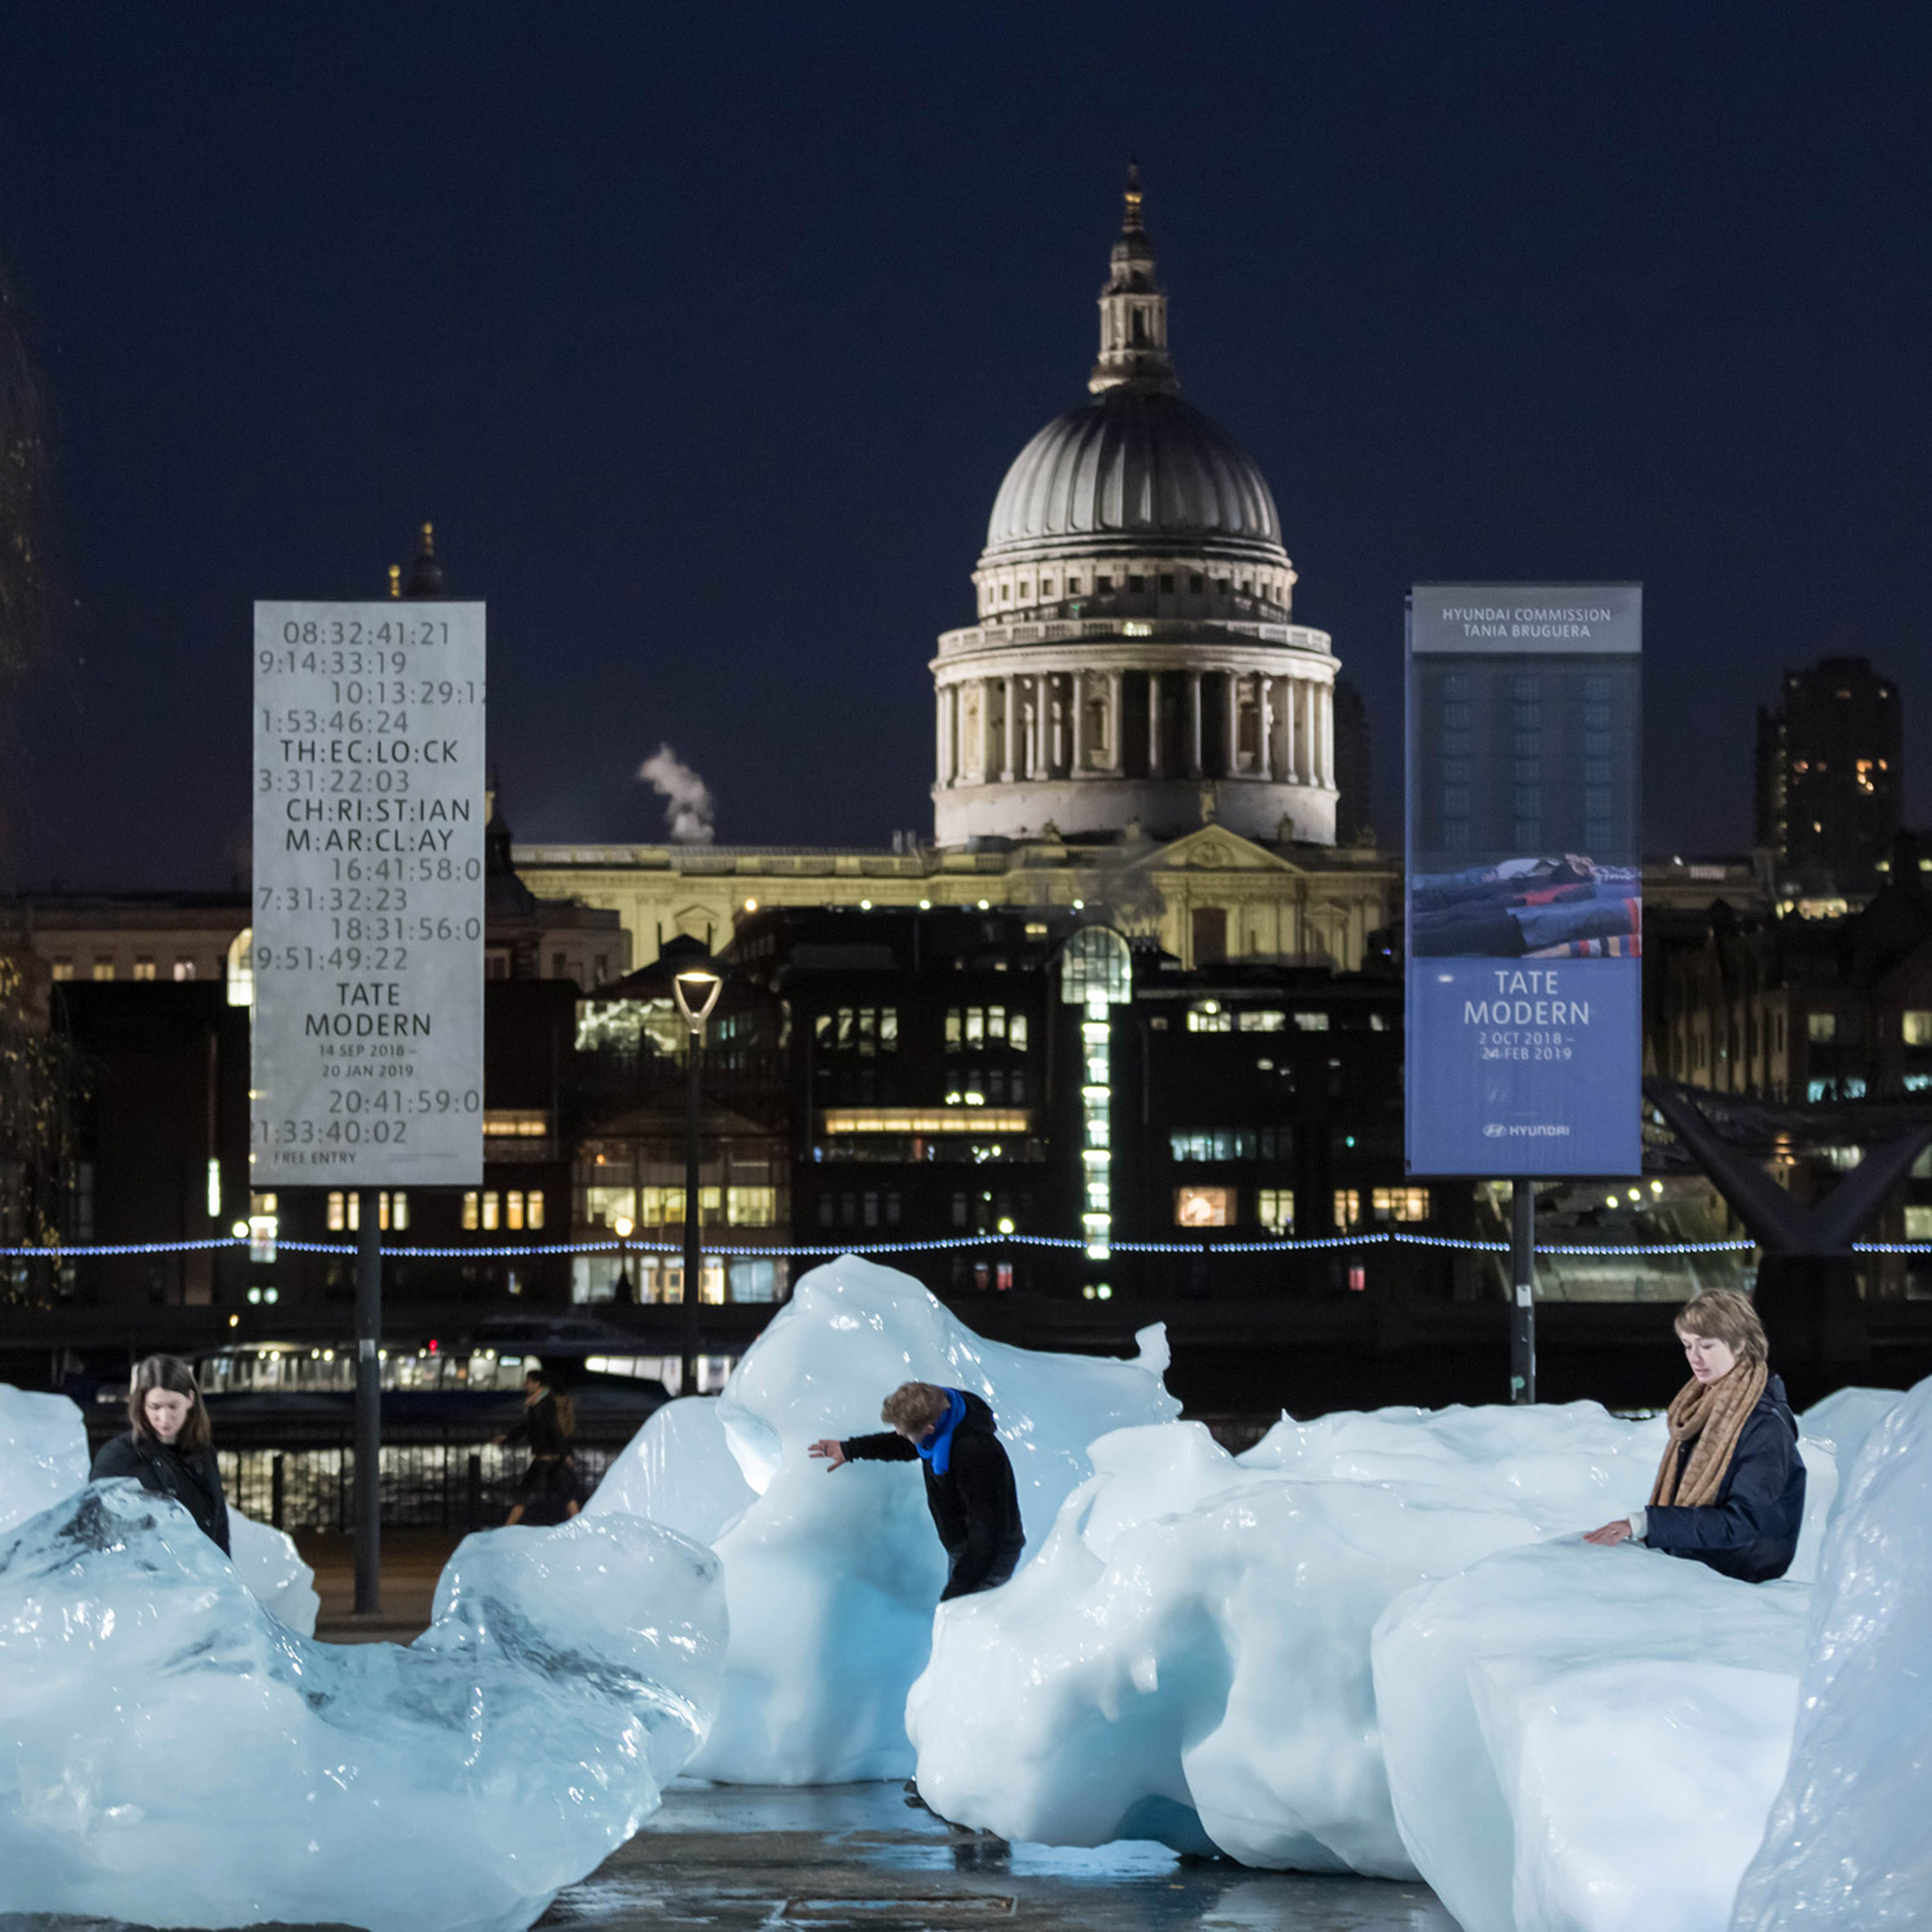 Olafur Eliasson installs blocks of glacial ice across London in